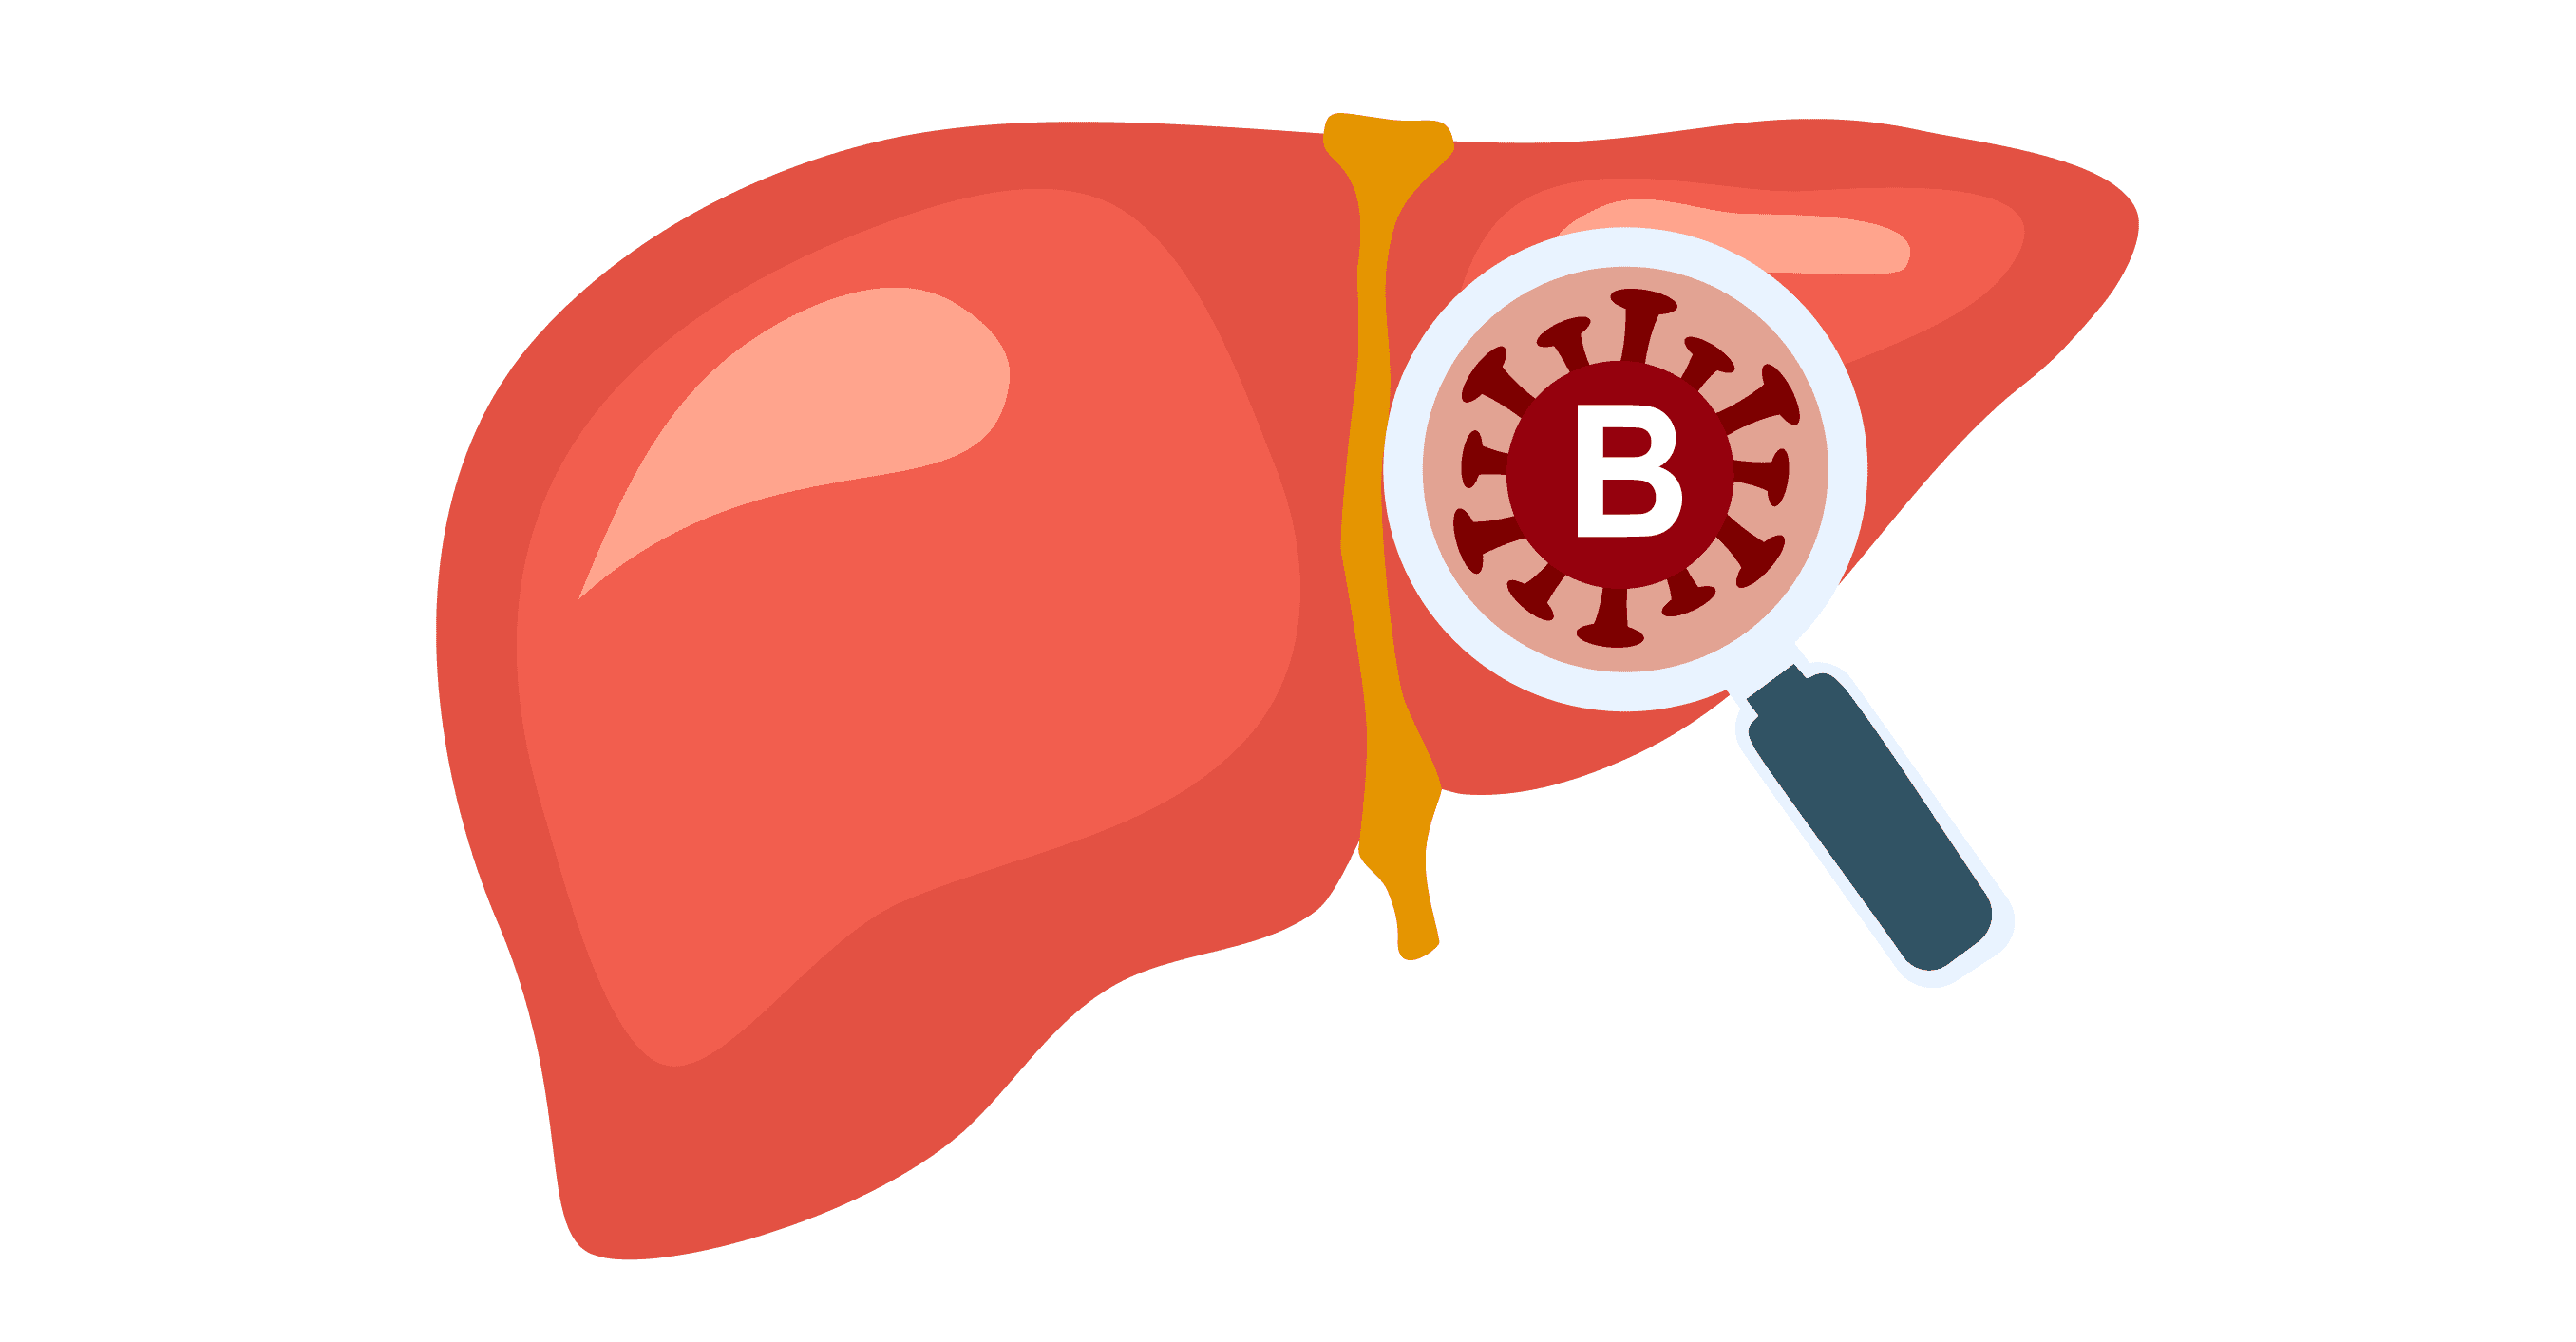 Hepatitis-B-Krankheit Konzept Vektor-Illustration